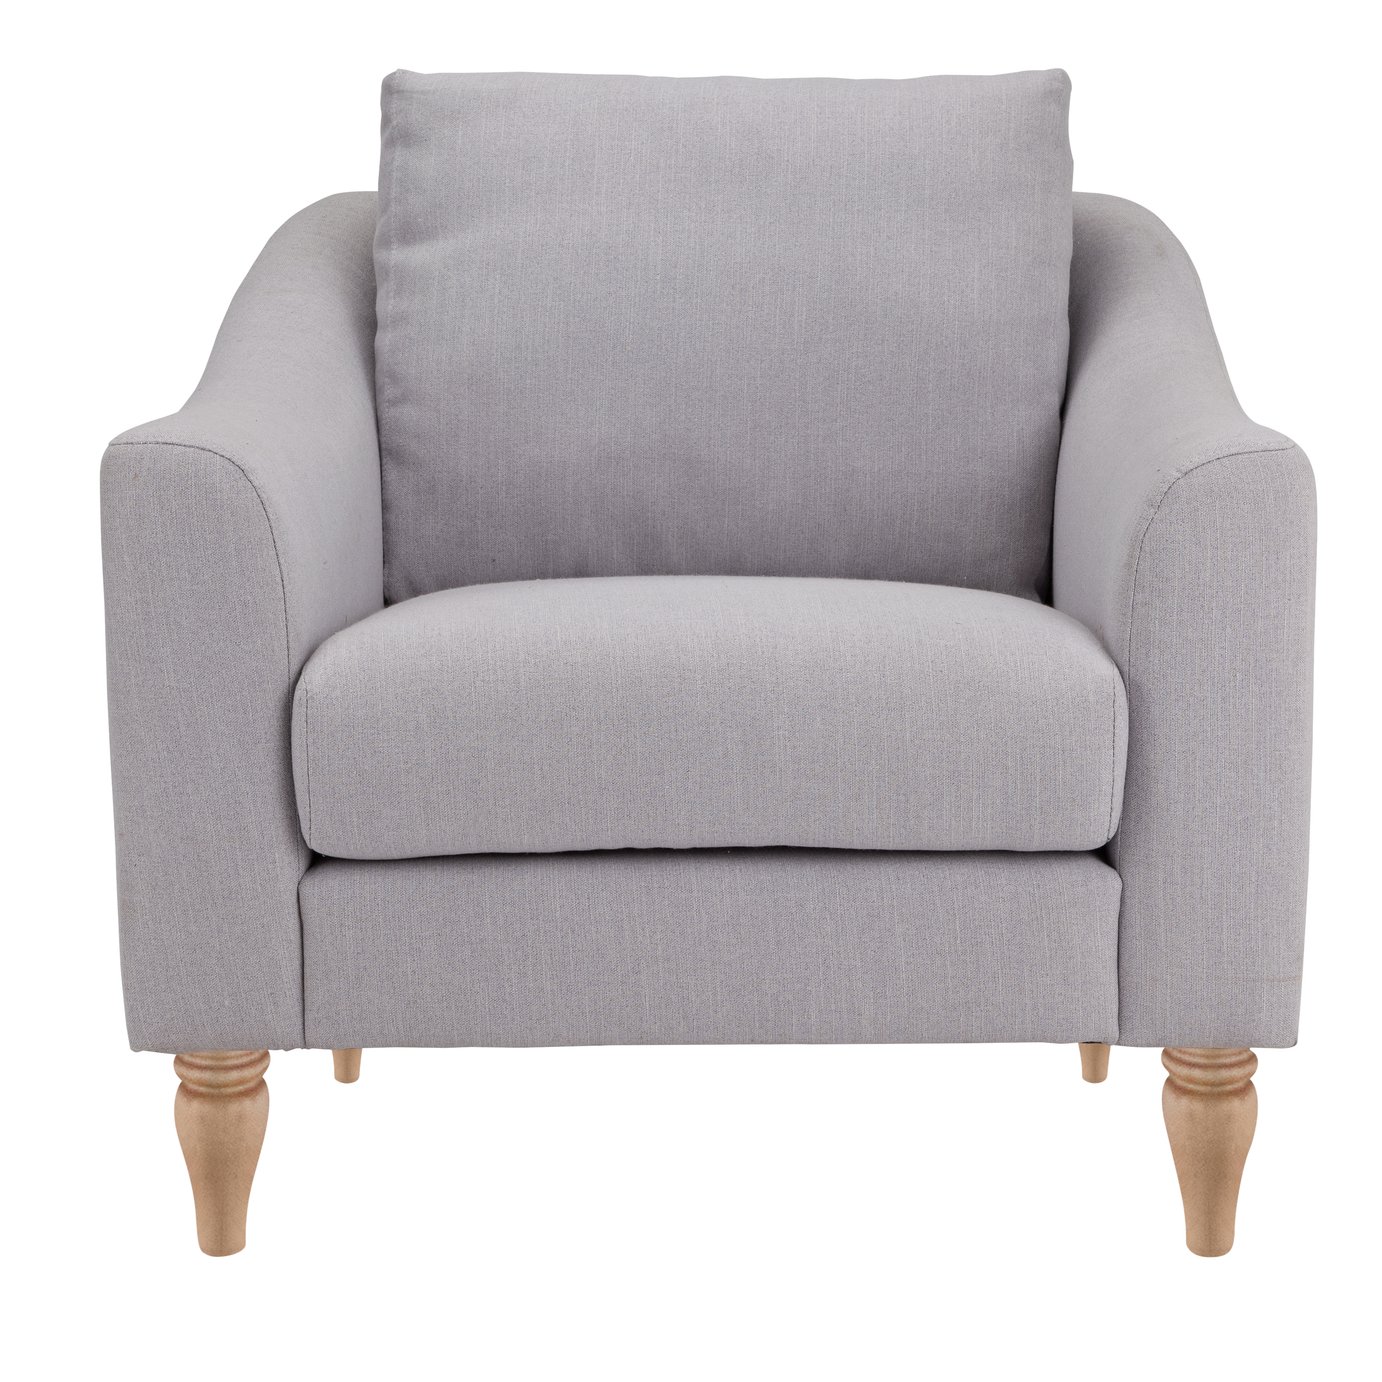 Argos Home Cameron Fabric Cuddle Chair - Light Grey